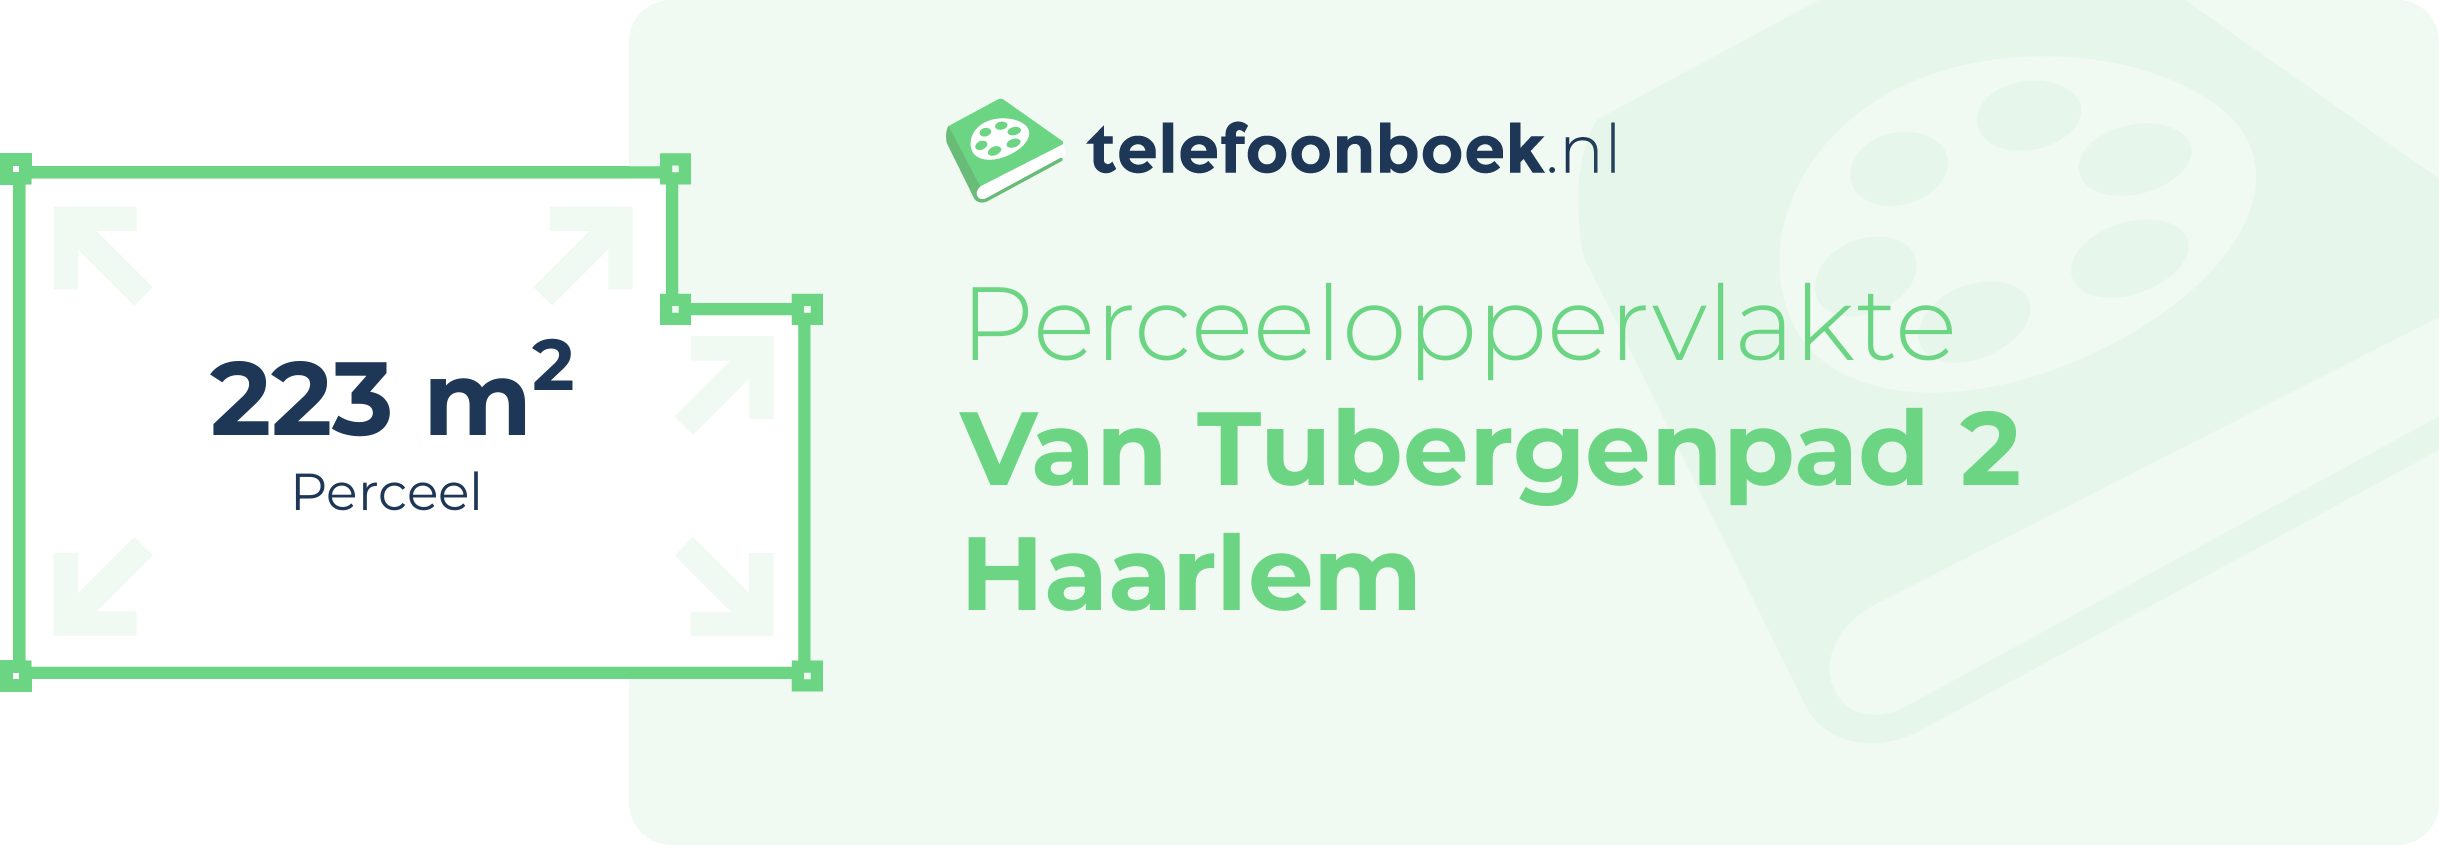 Perceeloppervlakte Van Tubergenpad 2 Haarlem